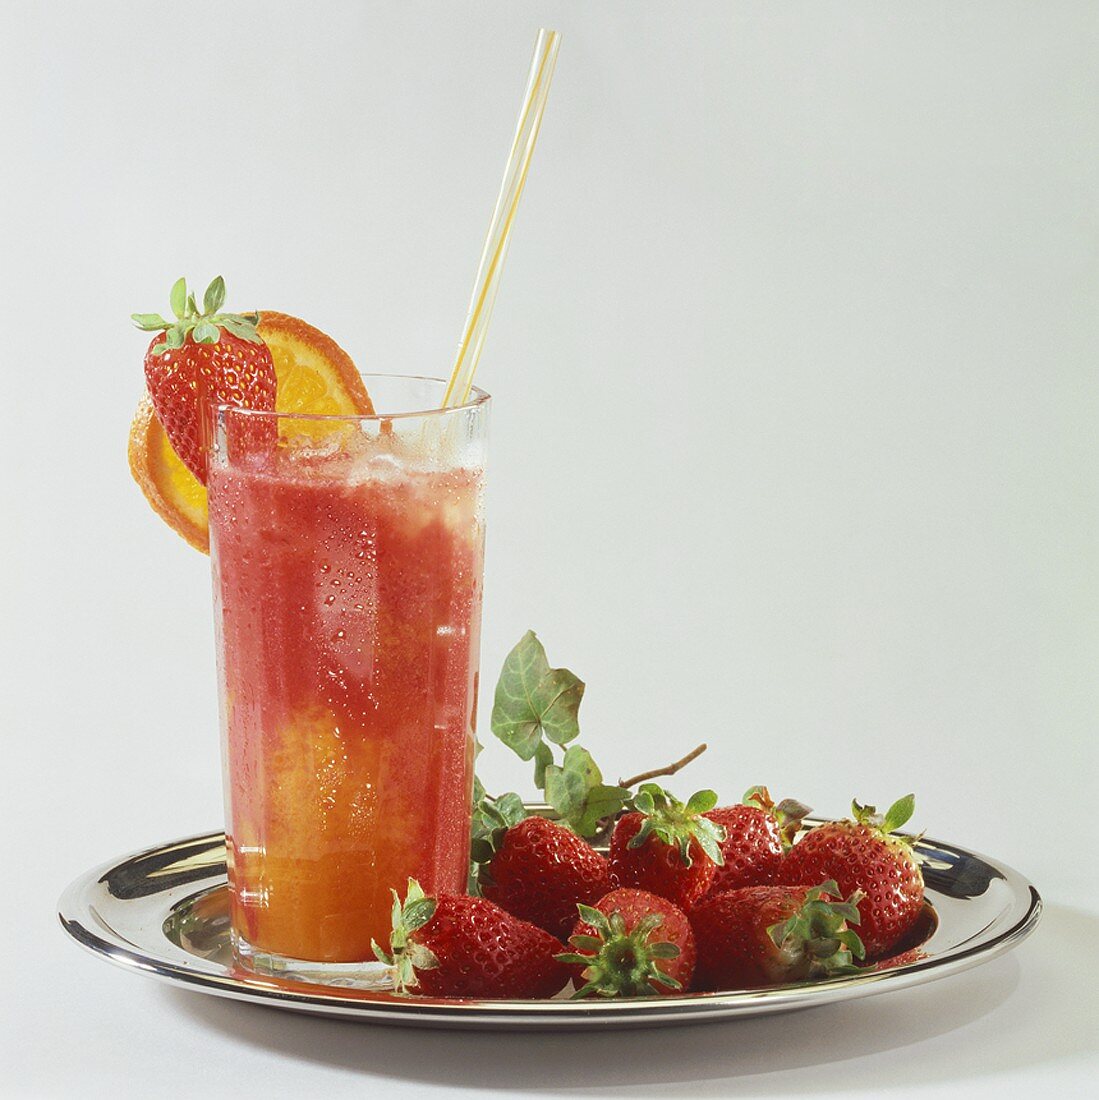 Orangen-Erdbeer-Drink im Glas